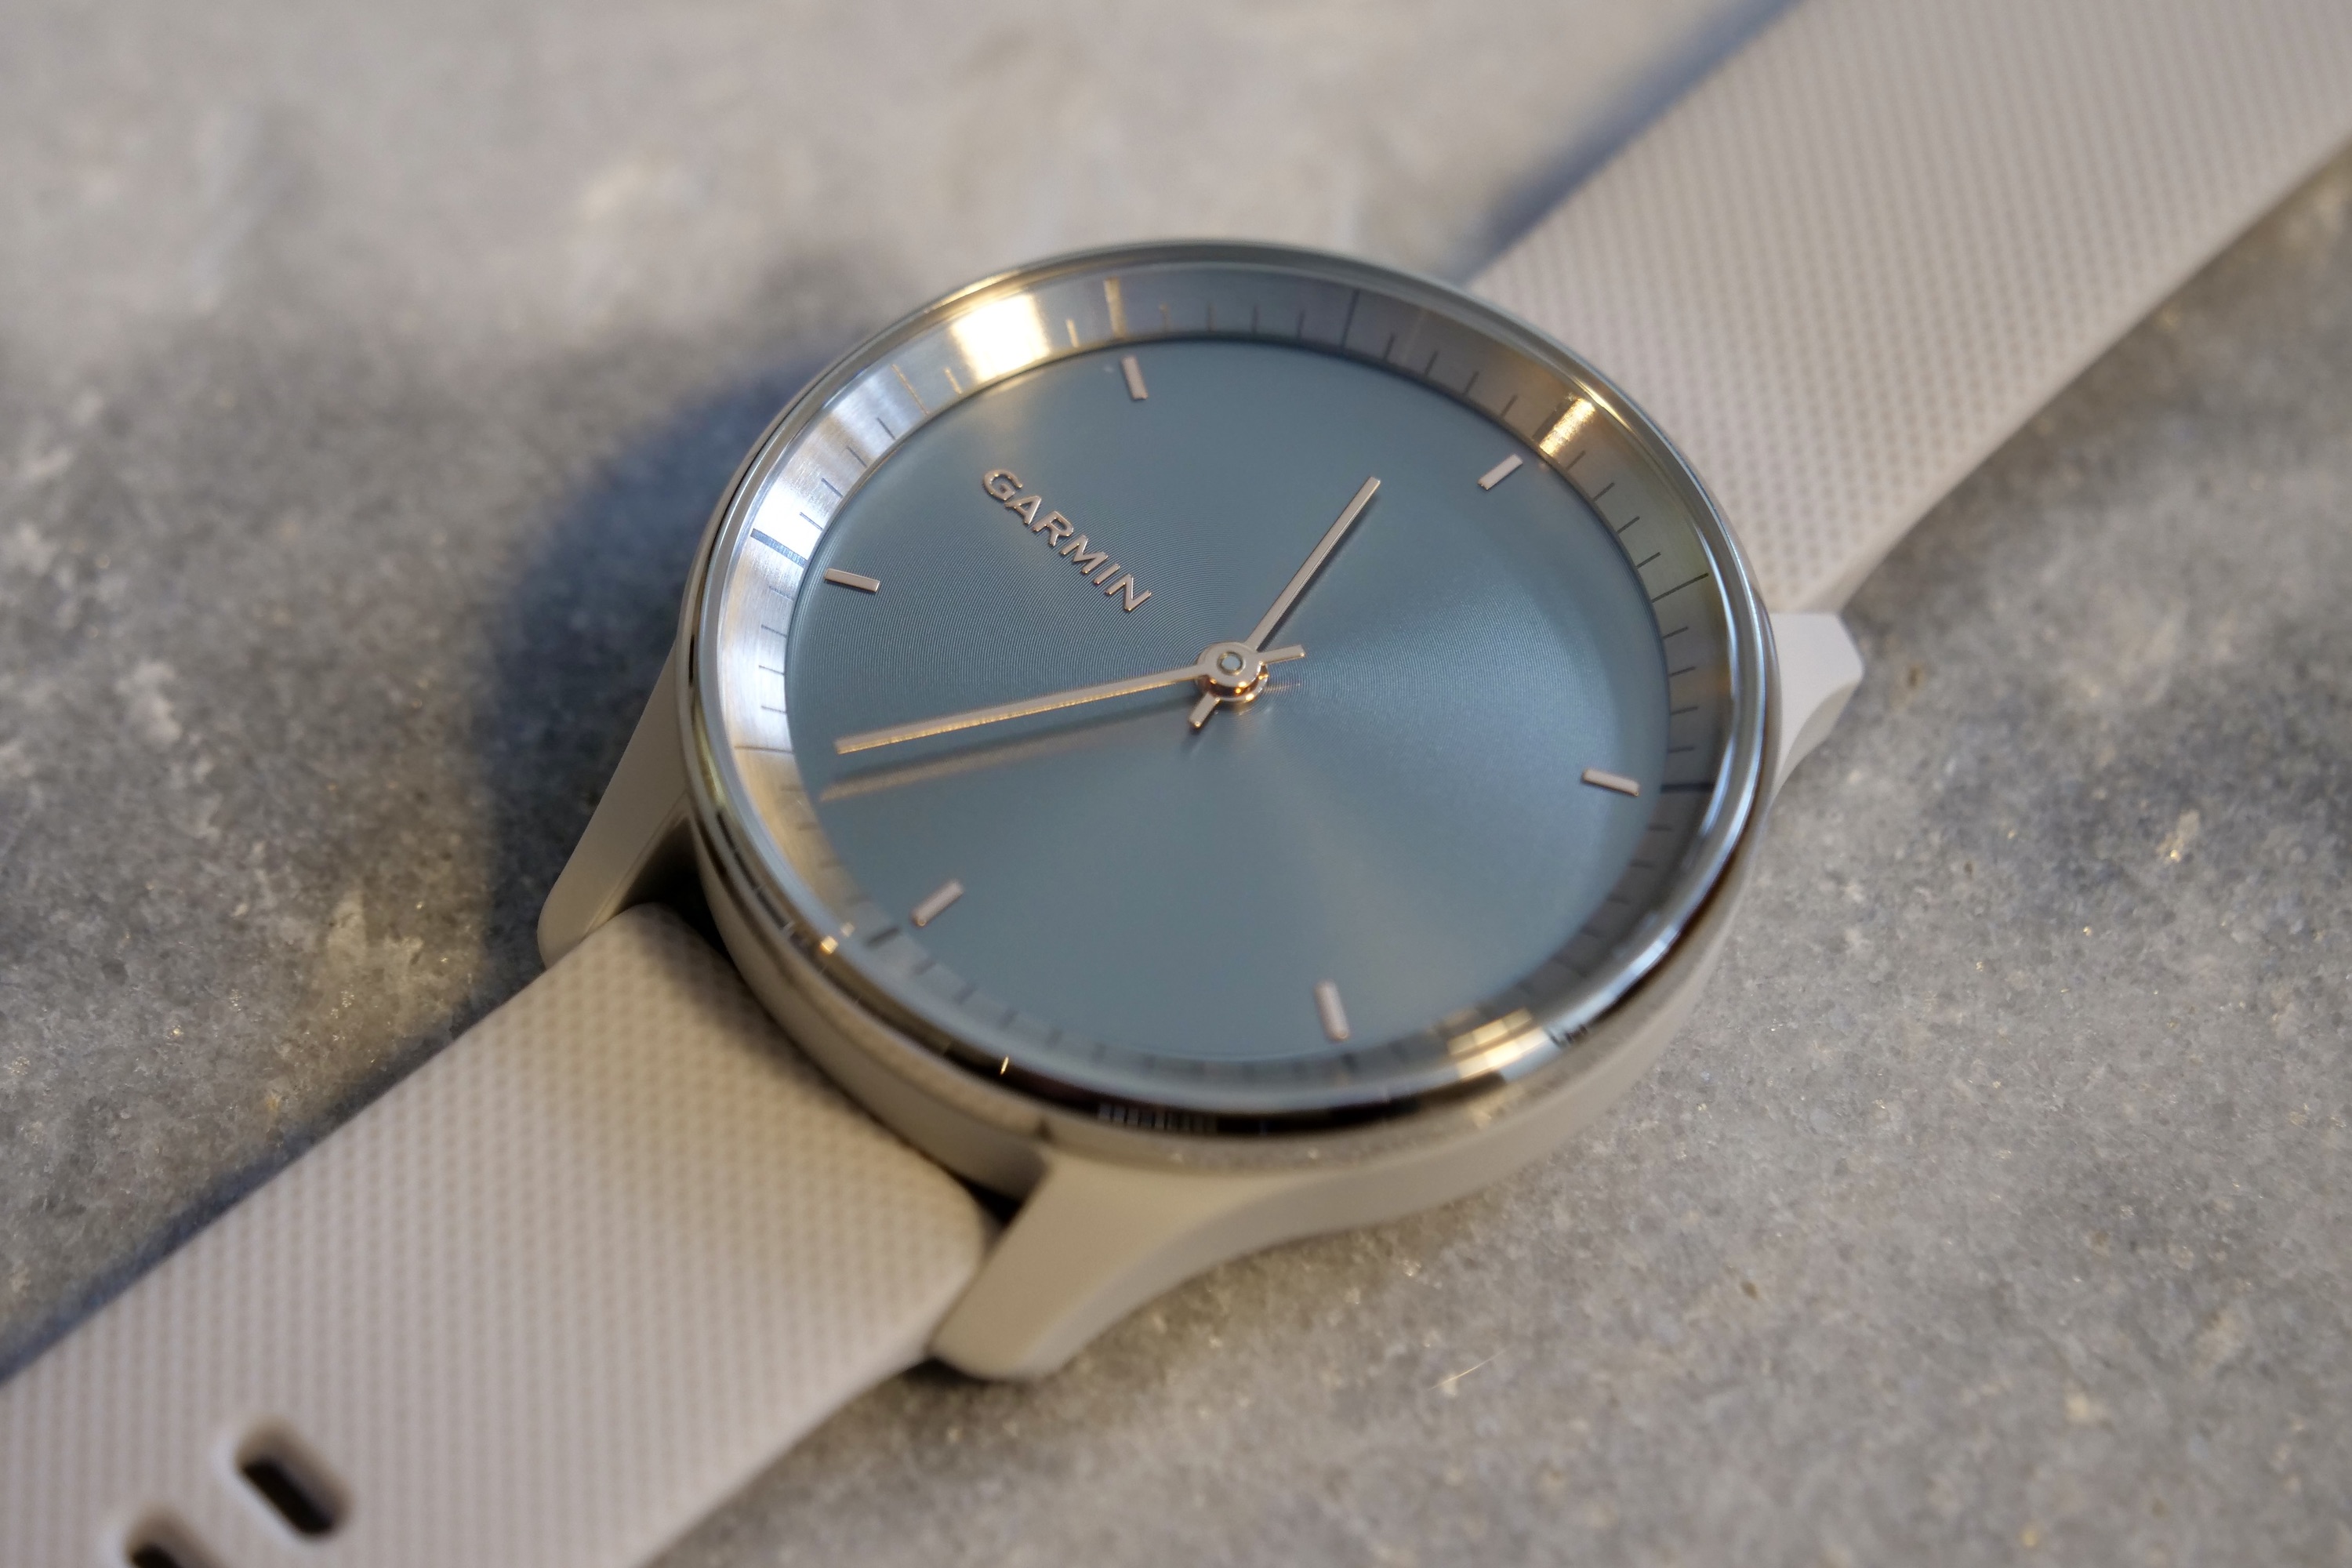 Garmin Vivomove Trend review: the smartwatch with a secret 